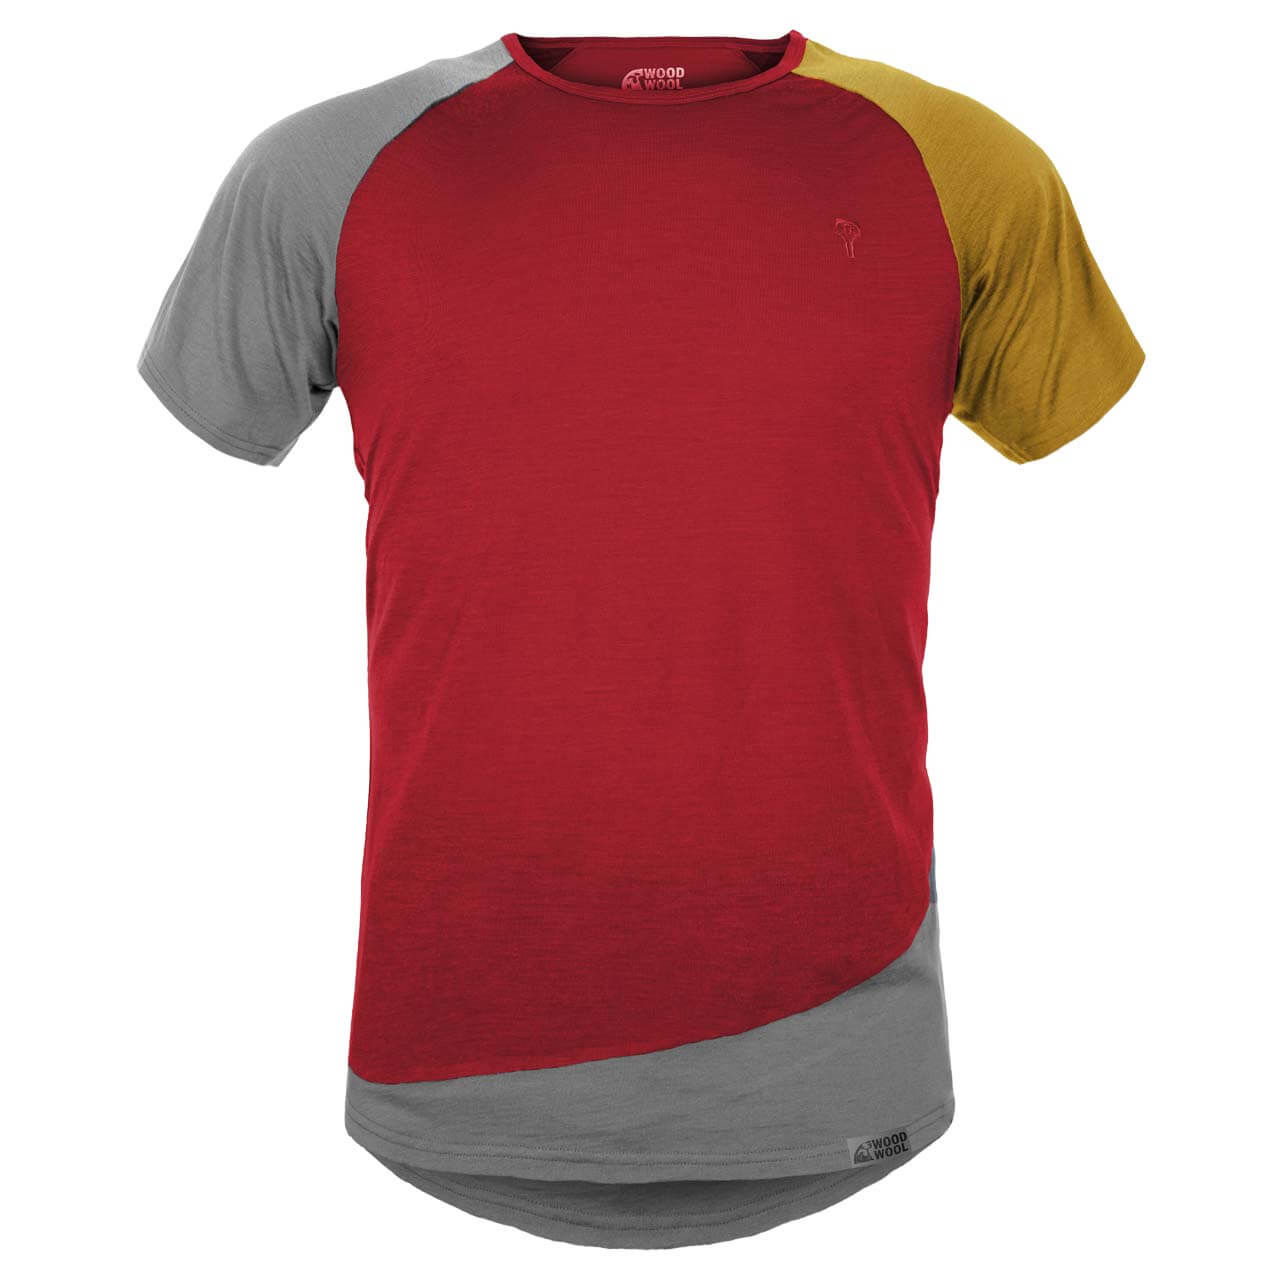 Grüezi Bag WoodWool T-Shirt Mr. Kirk - Fired Red Brick, L von Grüezi Bag